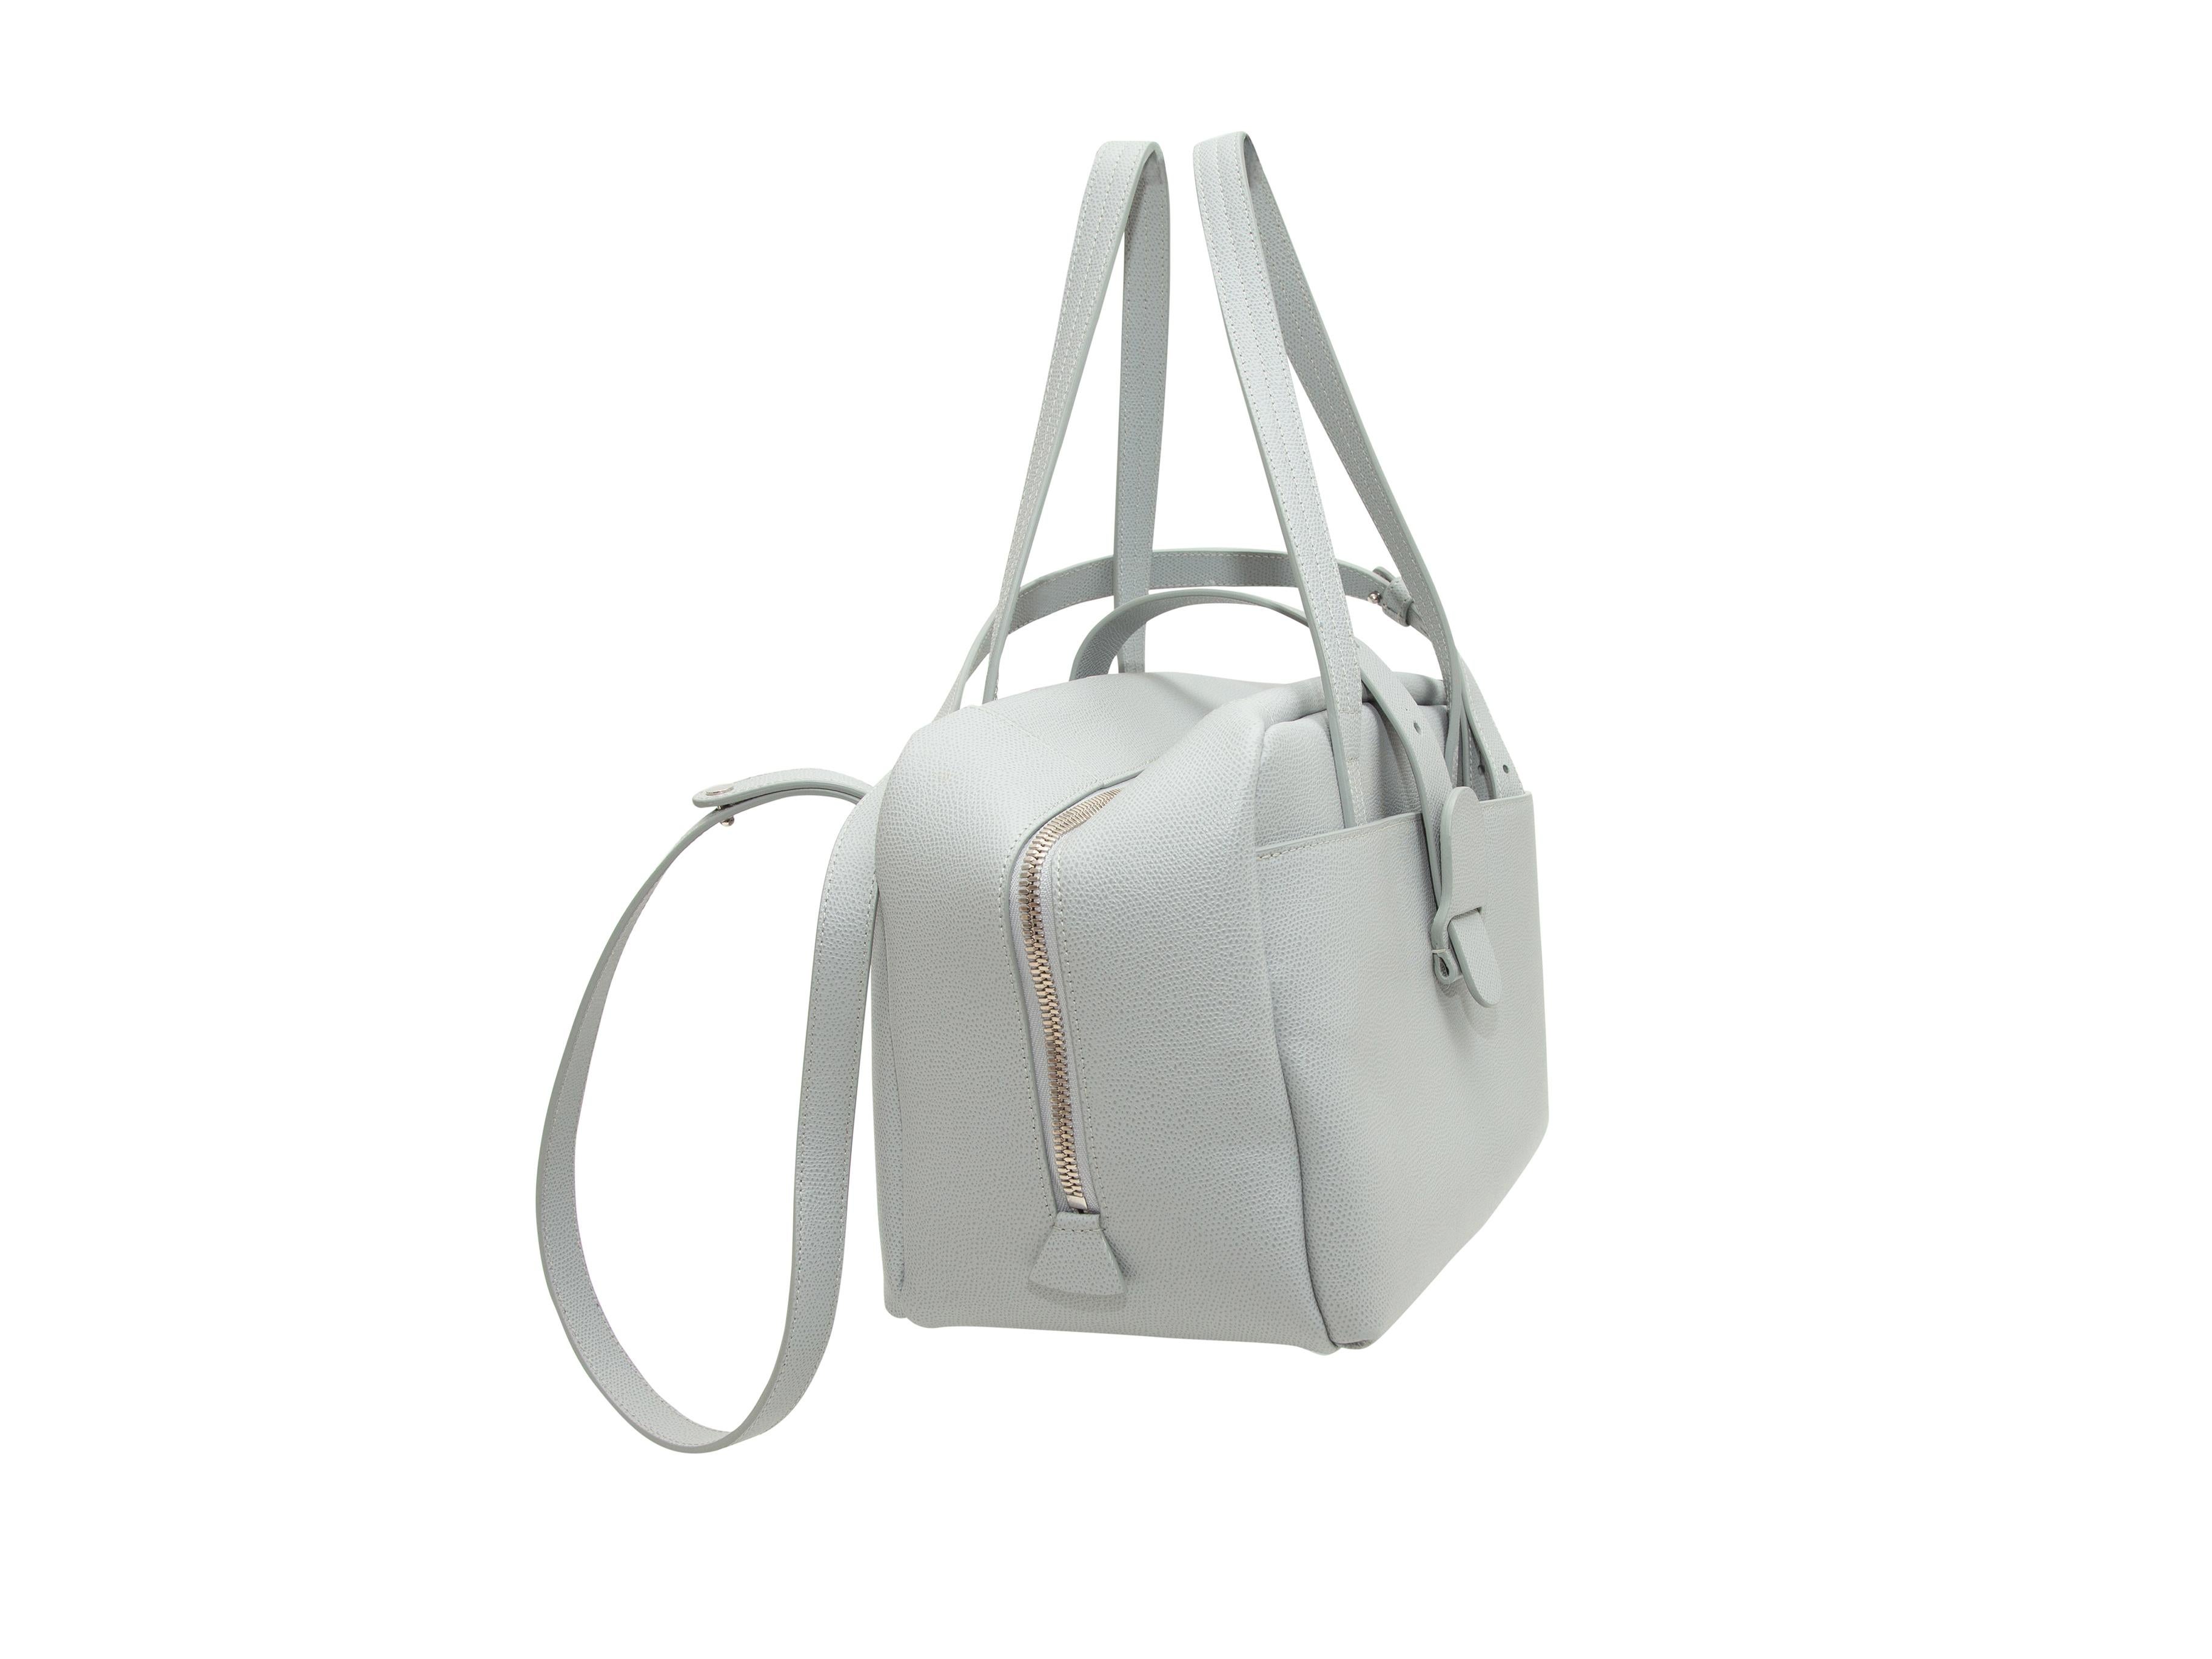 Product details: Light grey leather Maestra bag by Senreve. Silver-tone hardware. Dual flat handles. Single shoulder strap. Zip closure at top. 17